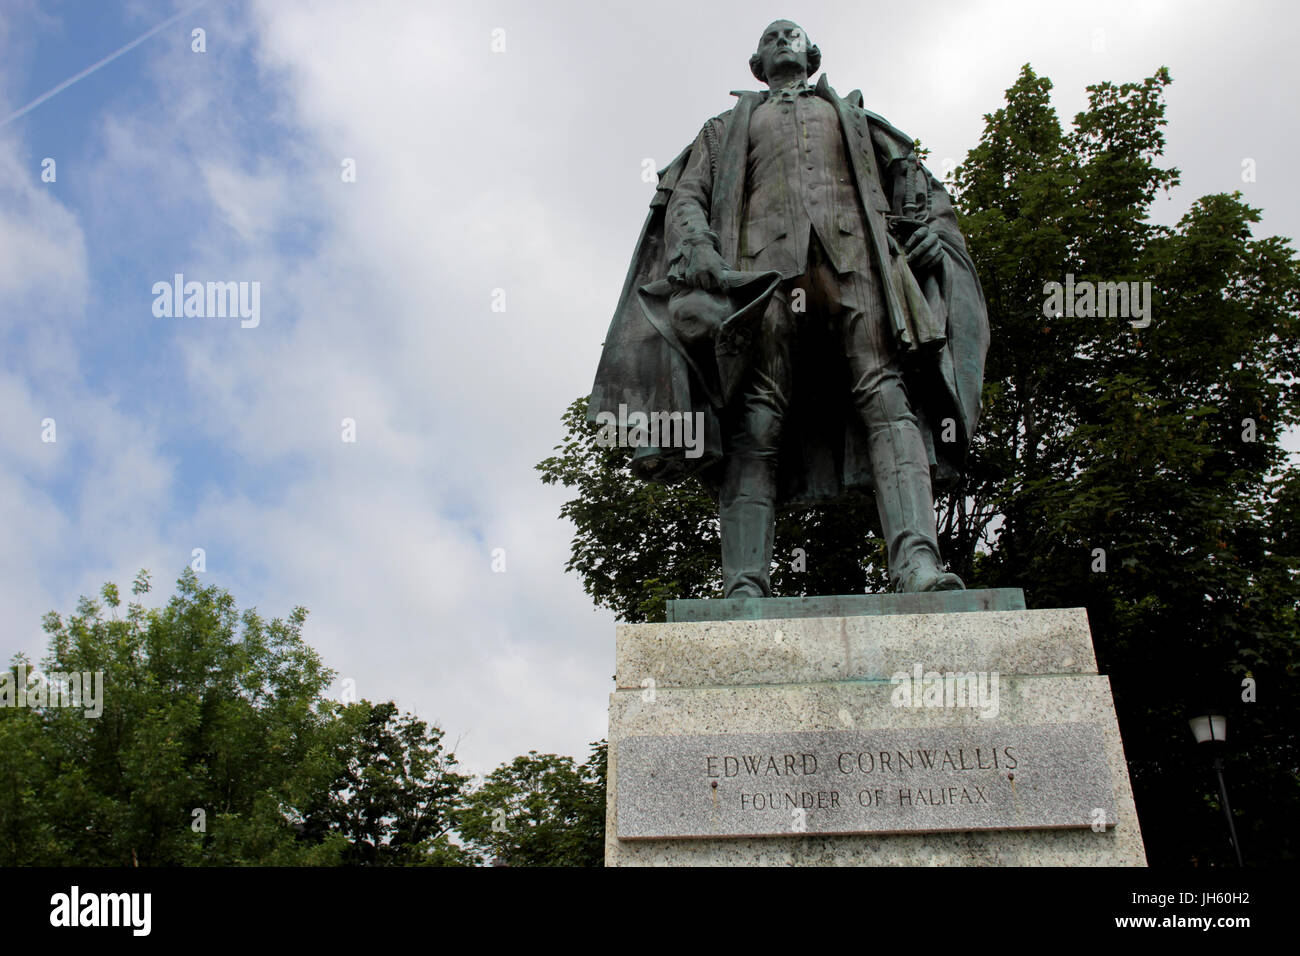 La Edward Cornwallis statua in Halifax, N.S., luglio 12, 2017. La stampa canadese immagini/Lee Brown Foto Stock